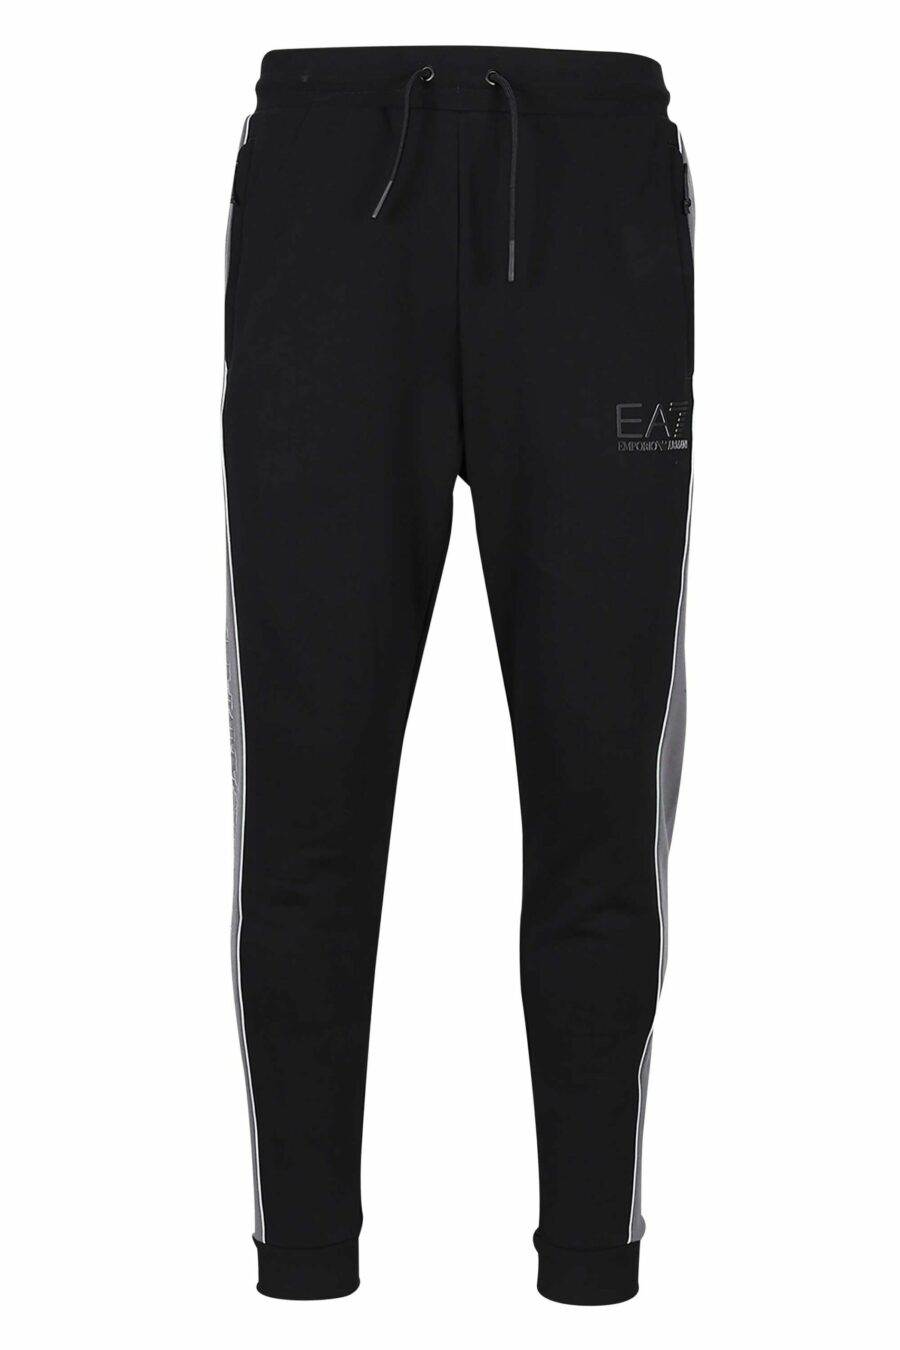 Pantalón de chándal negro con lineas grises laterales y minilogo "lux identity" - 8056787946842 scaled